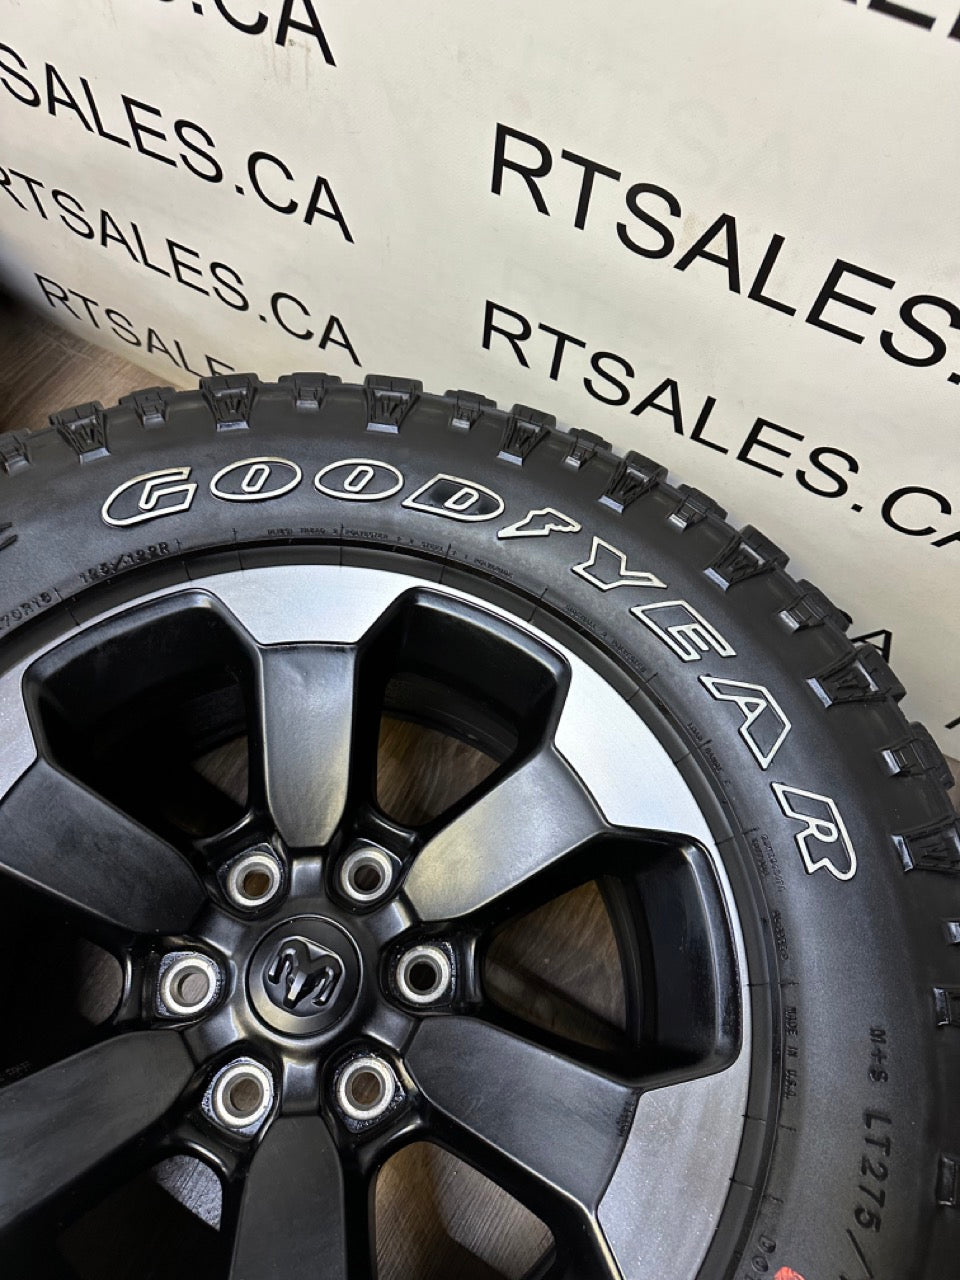 275/70/18 Goodyear Duratrac tires Dodge Ram 1500 6x139.7 (USED)